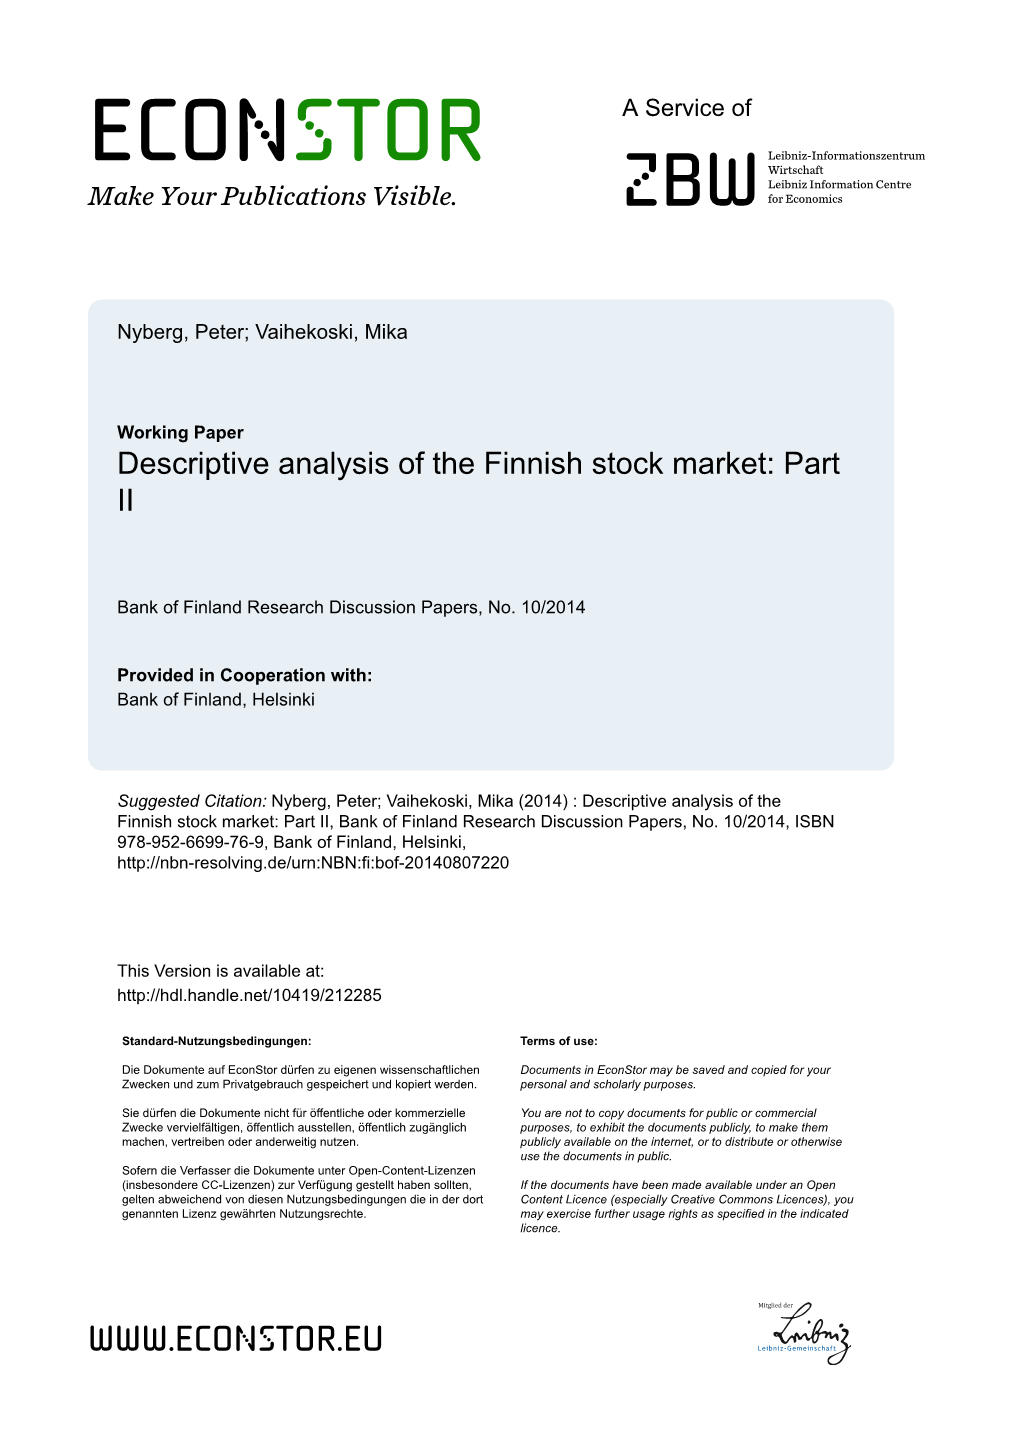 Descriptive Analysis of the Finnish Stock Market: Part II